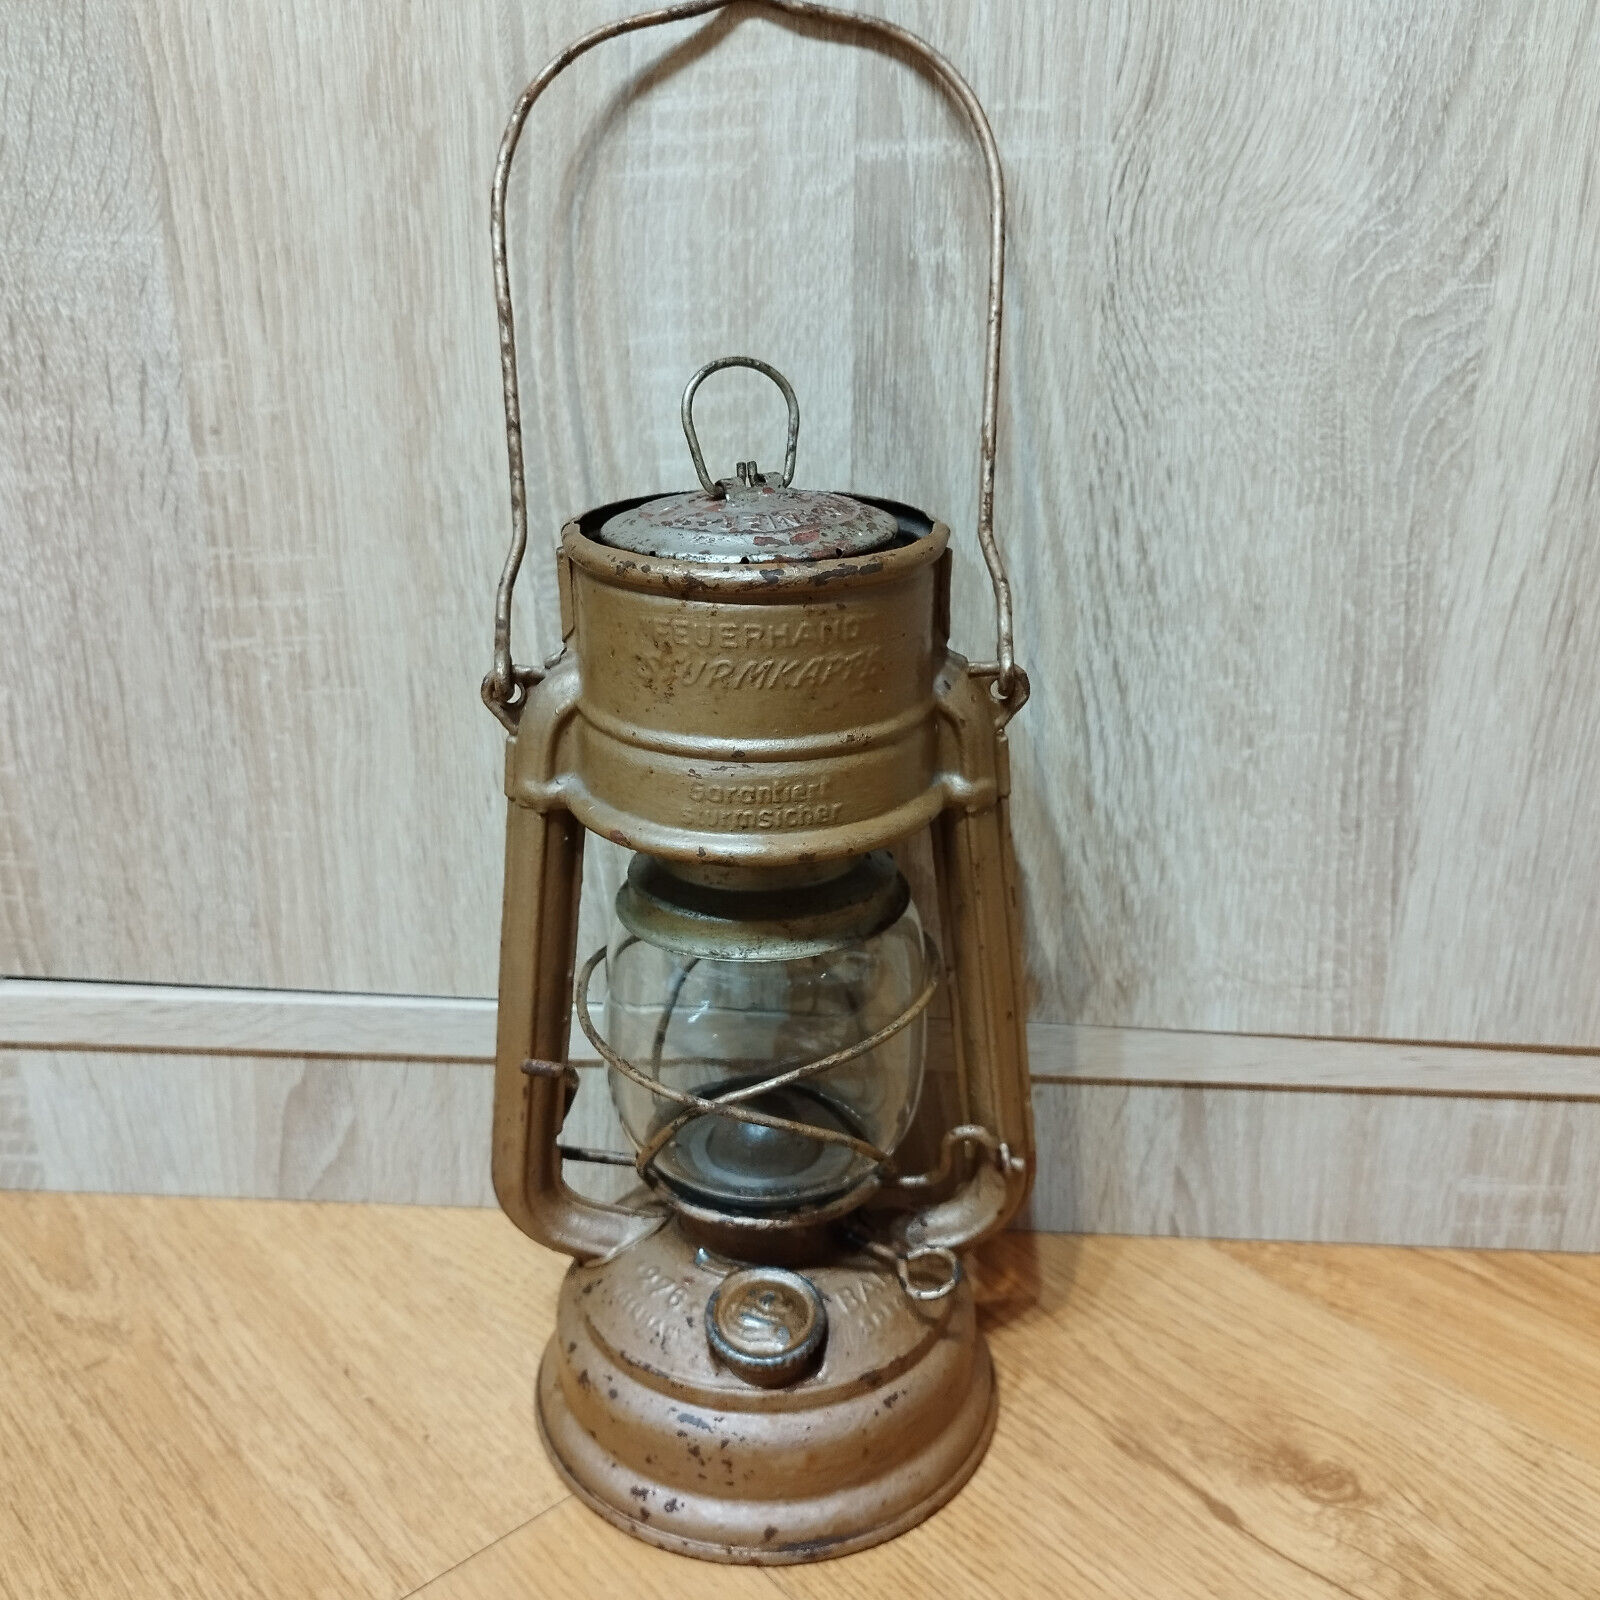 Old kerosene lantern Feuerhand 276 BABY special STURMKAPPE Germany Antique 